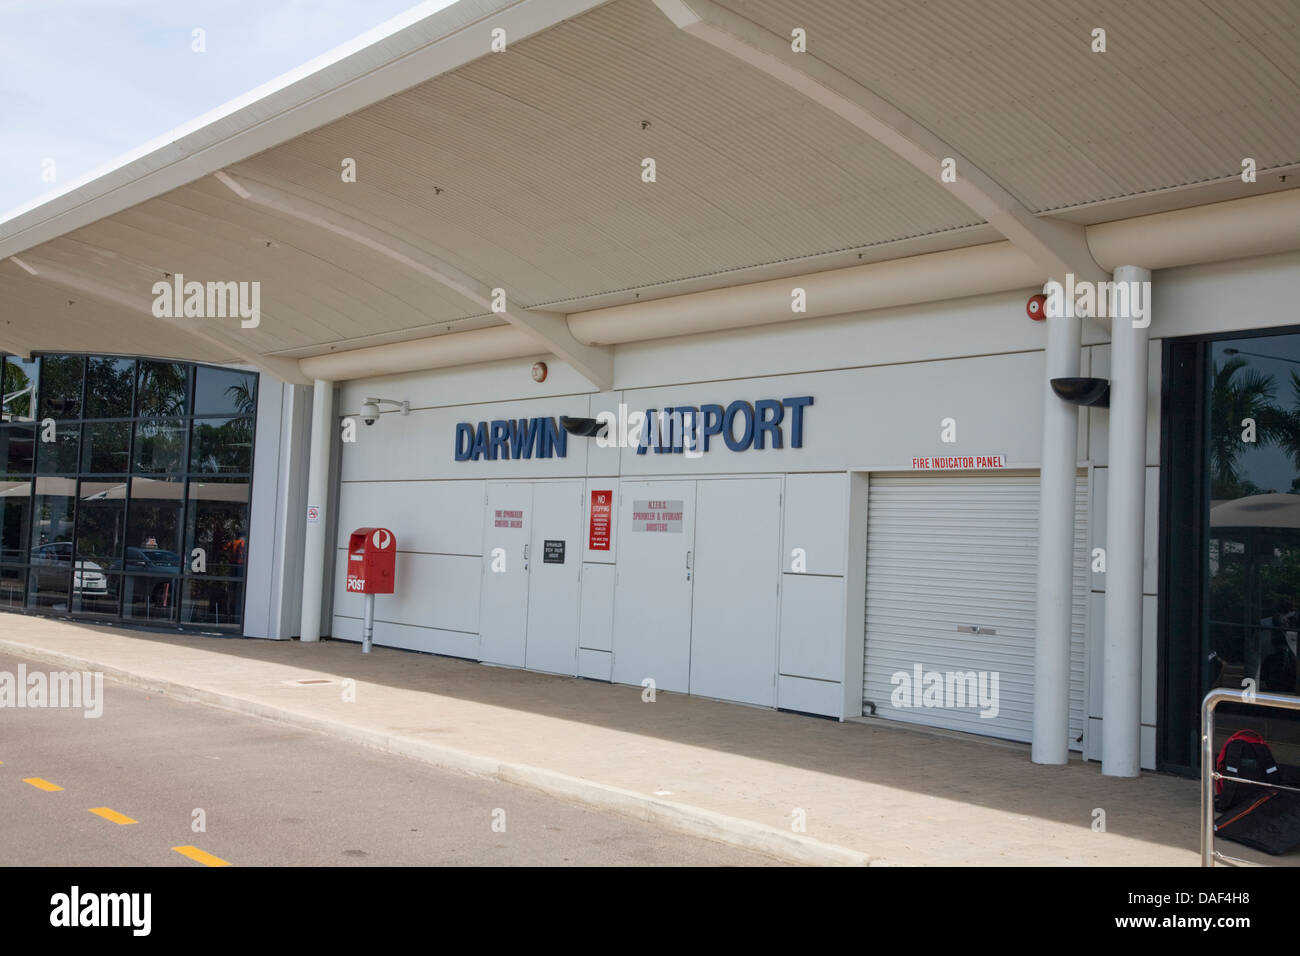 Darwin airport in the Northern Territory, Australia Stock Photo